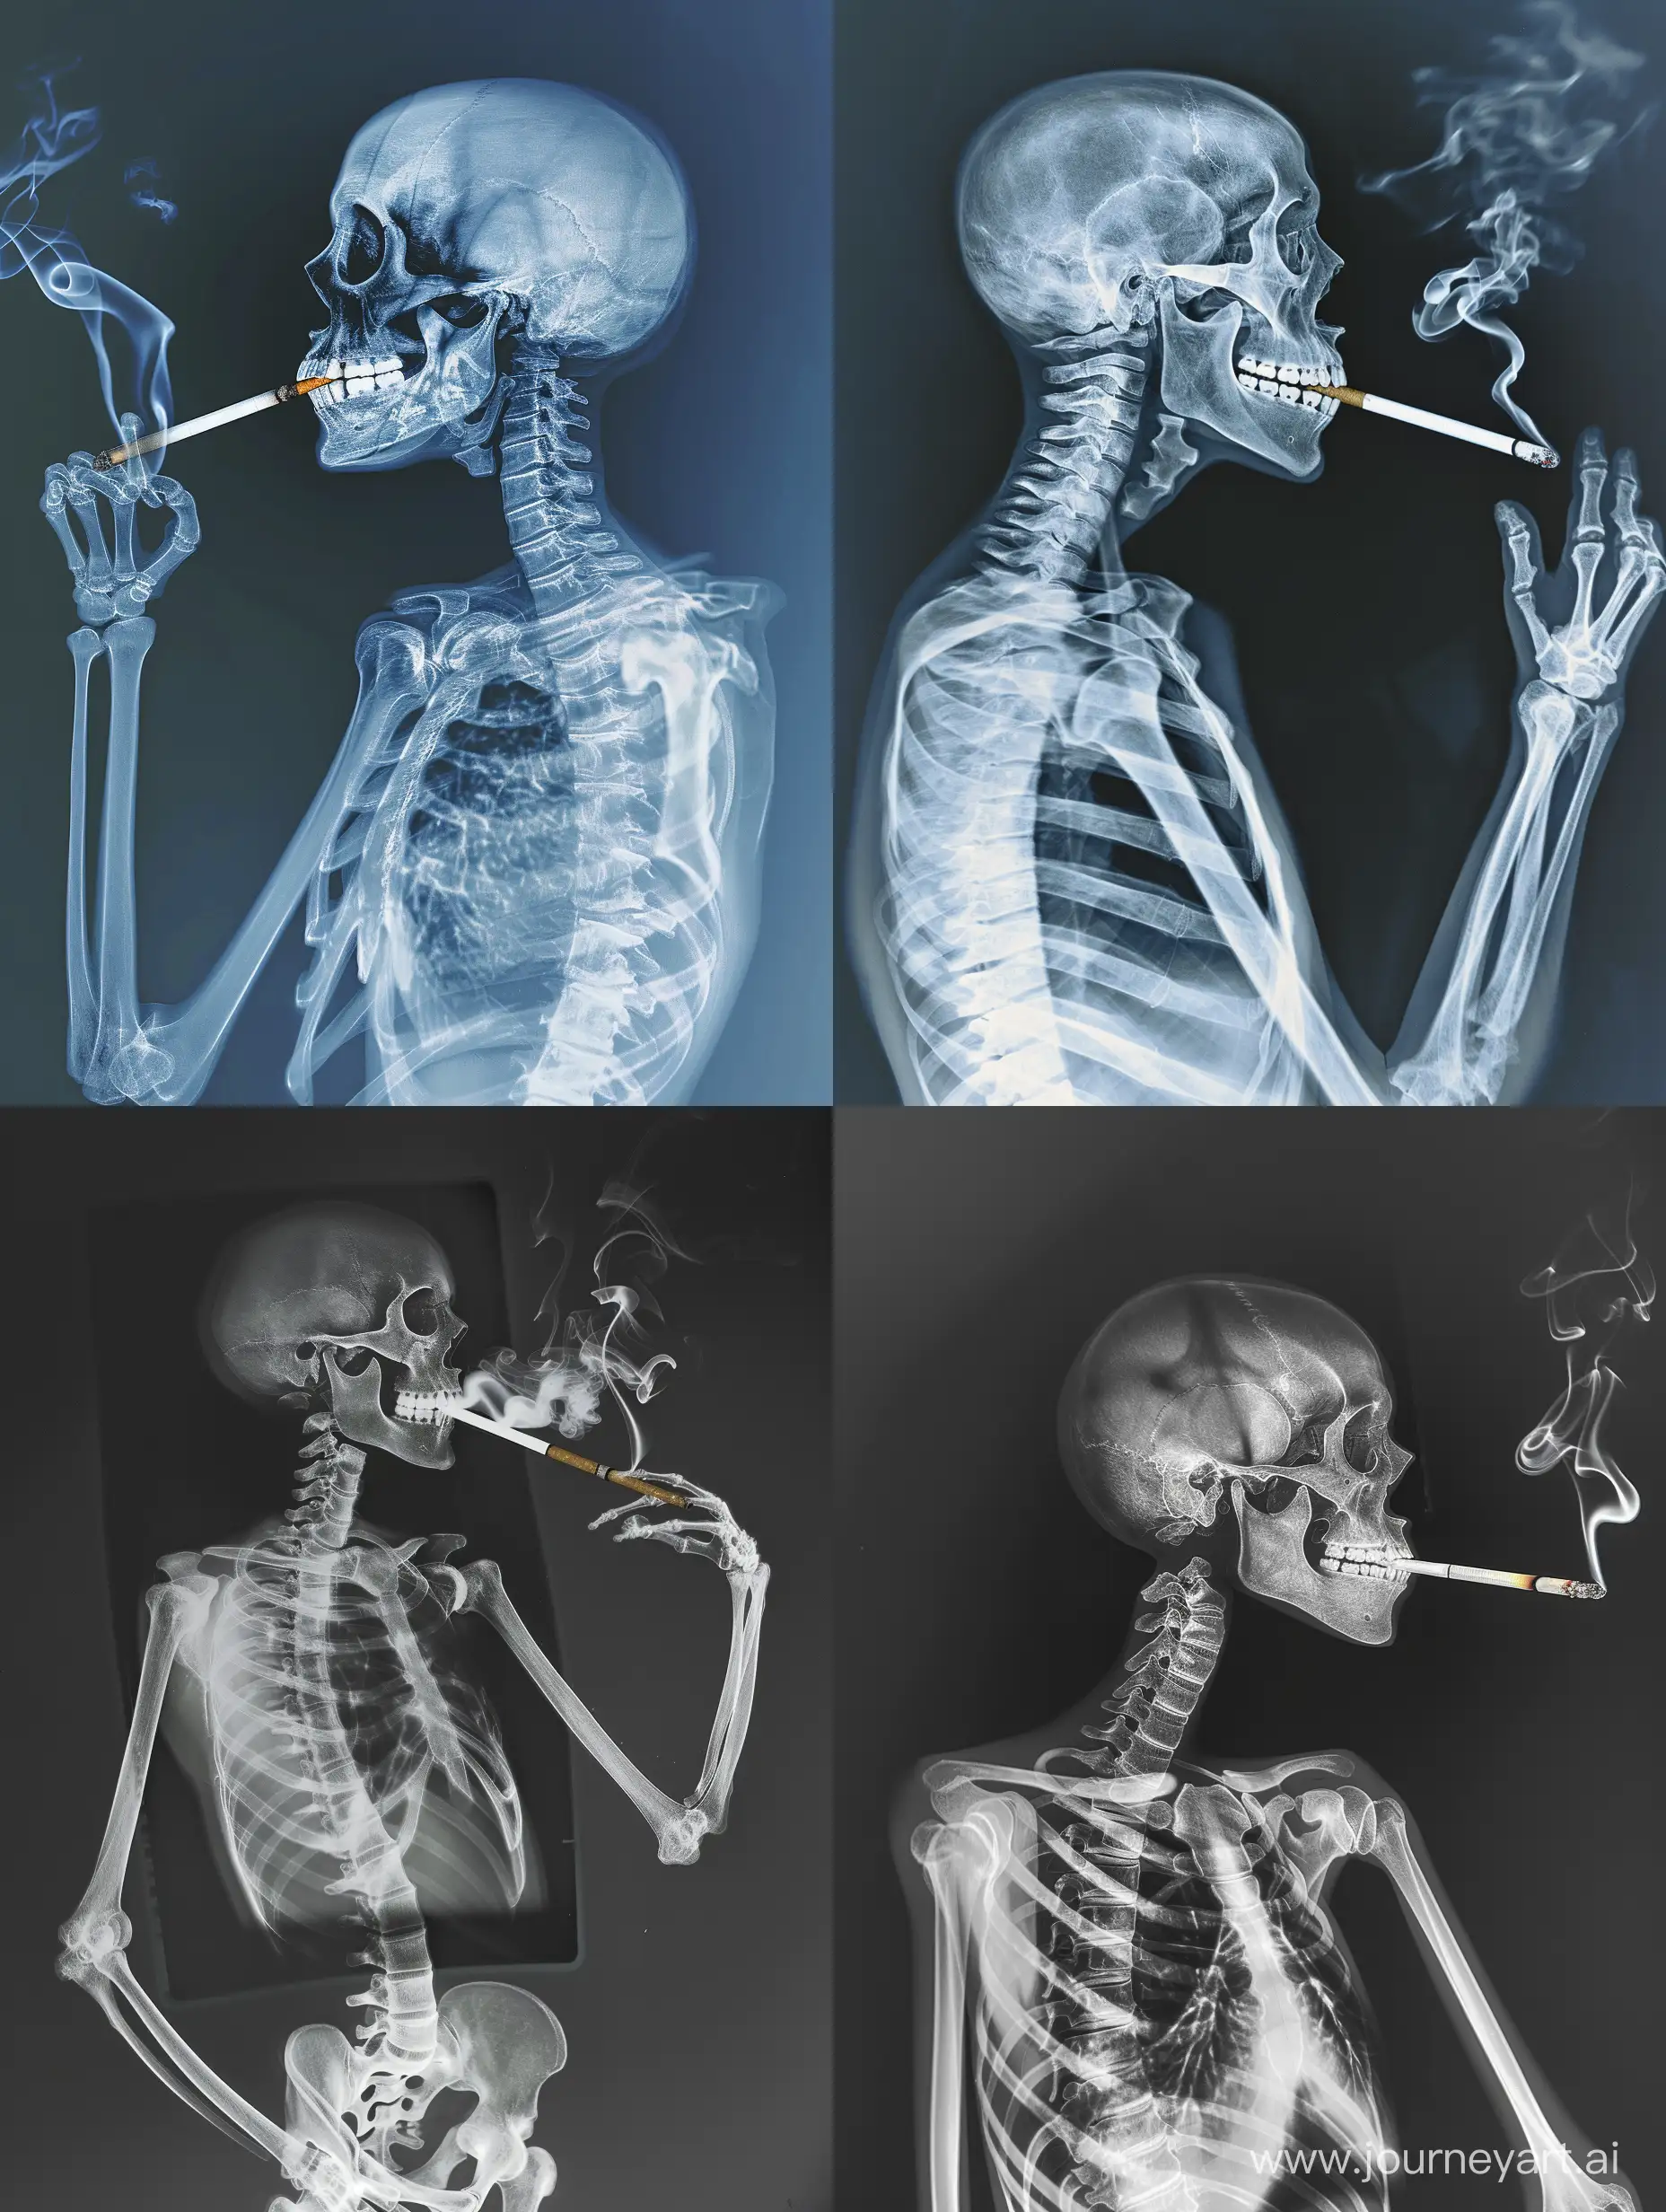 x-ray of a skeleton smoking